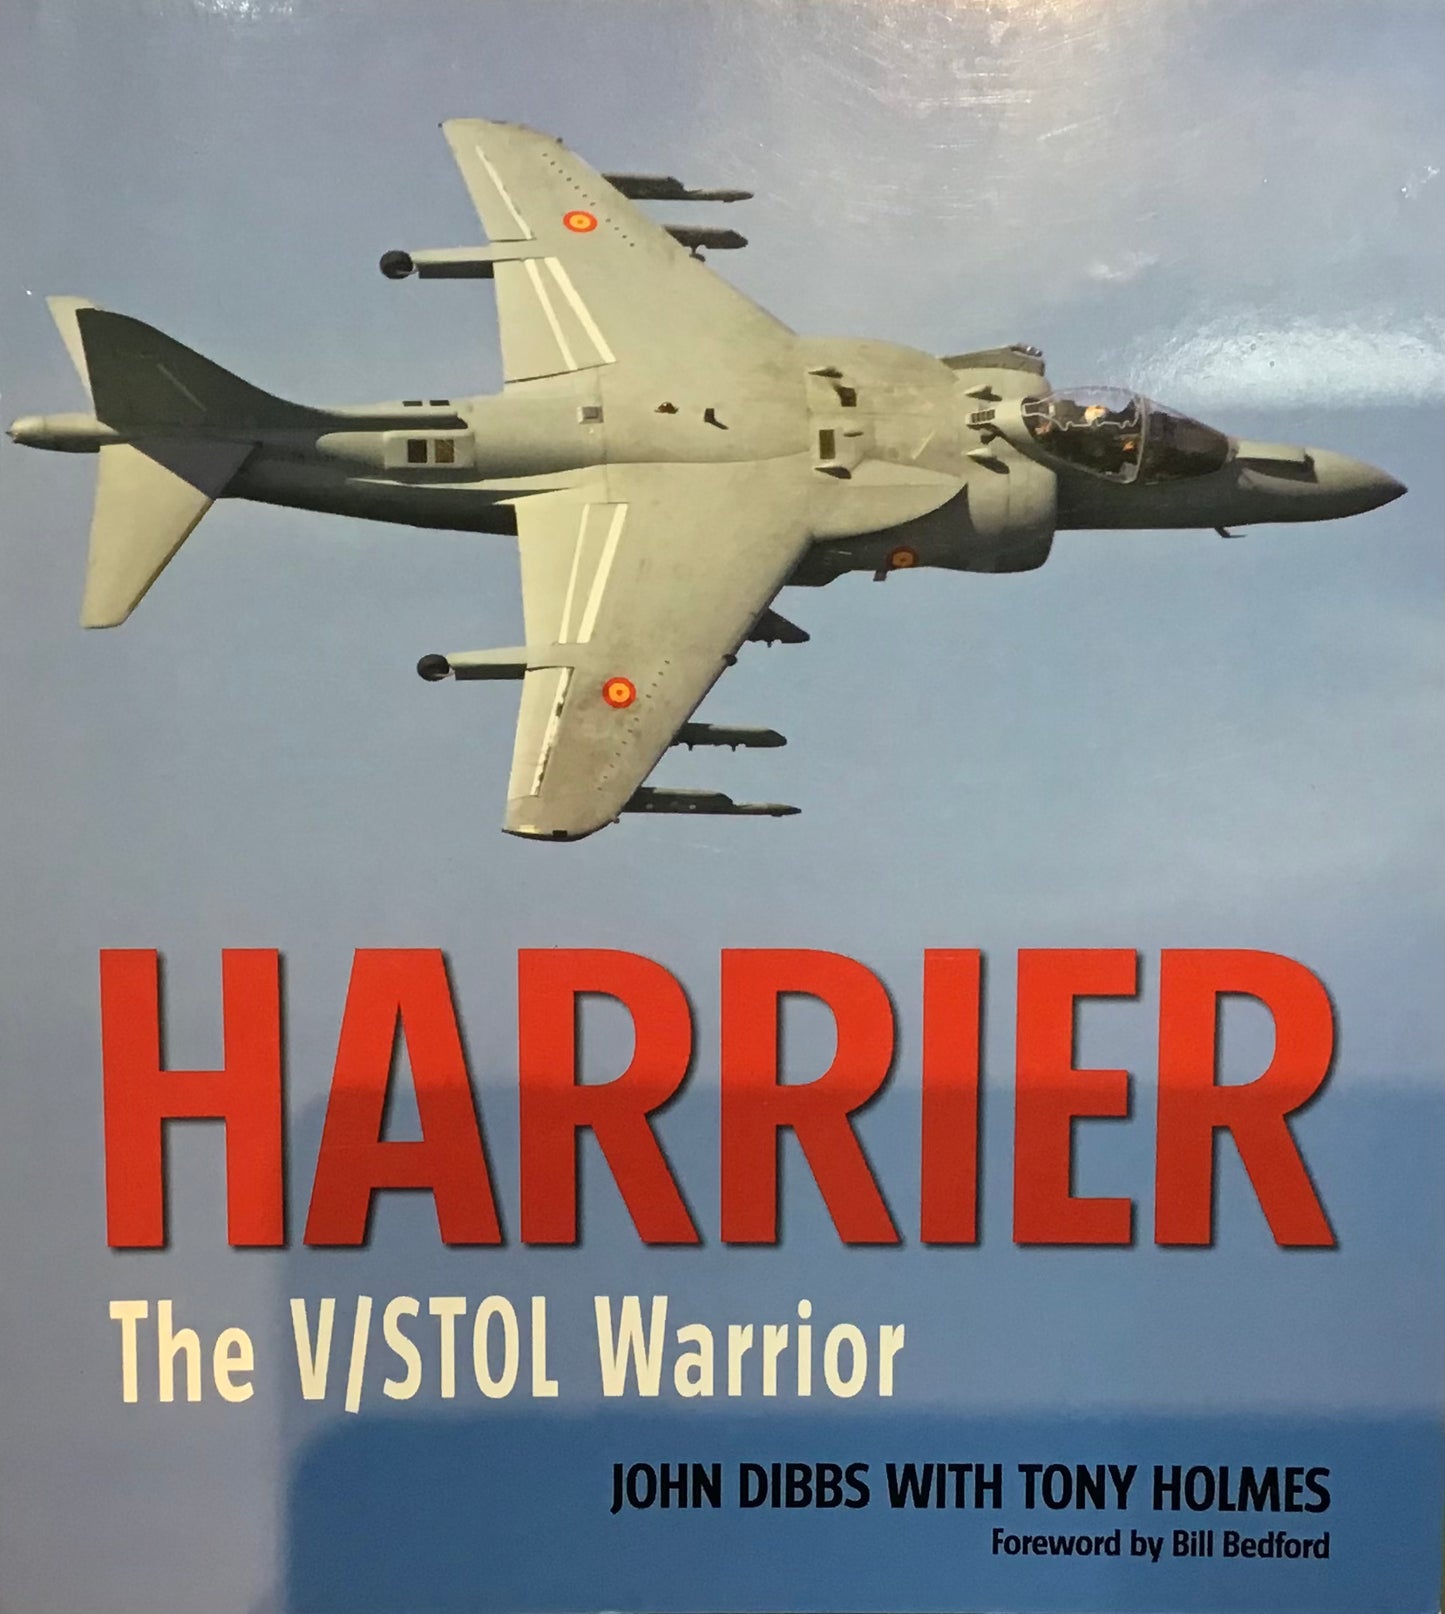 Harrier The V/STOL Warrior by John Dibbs with Tony Holmes - Chester Model Centre